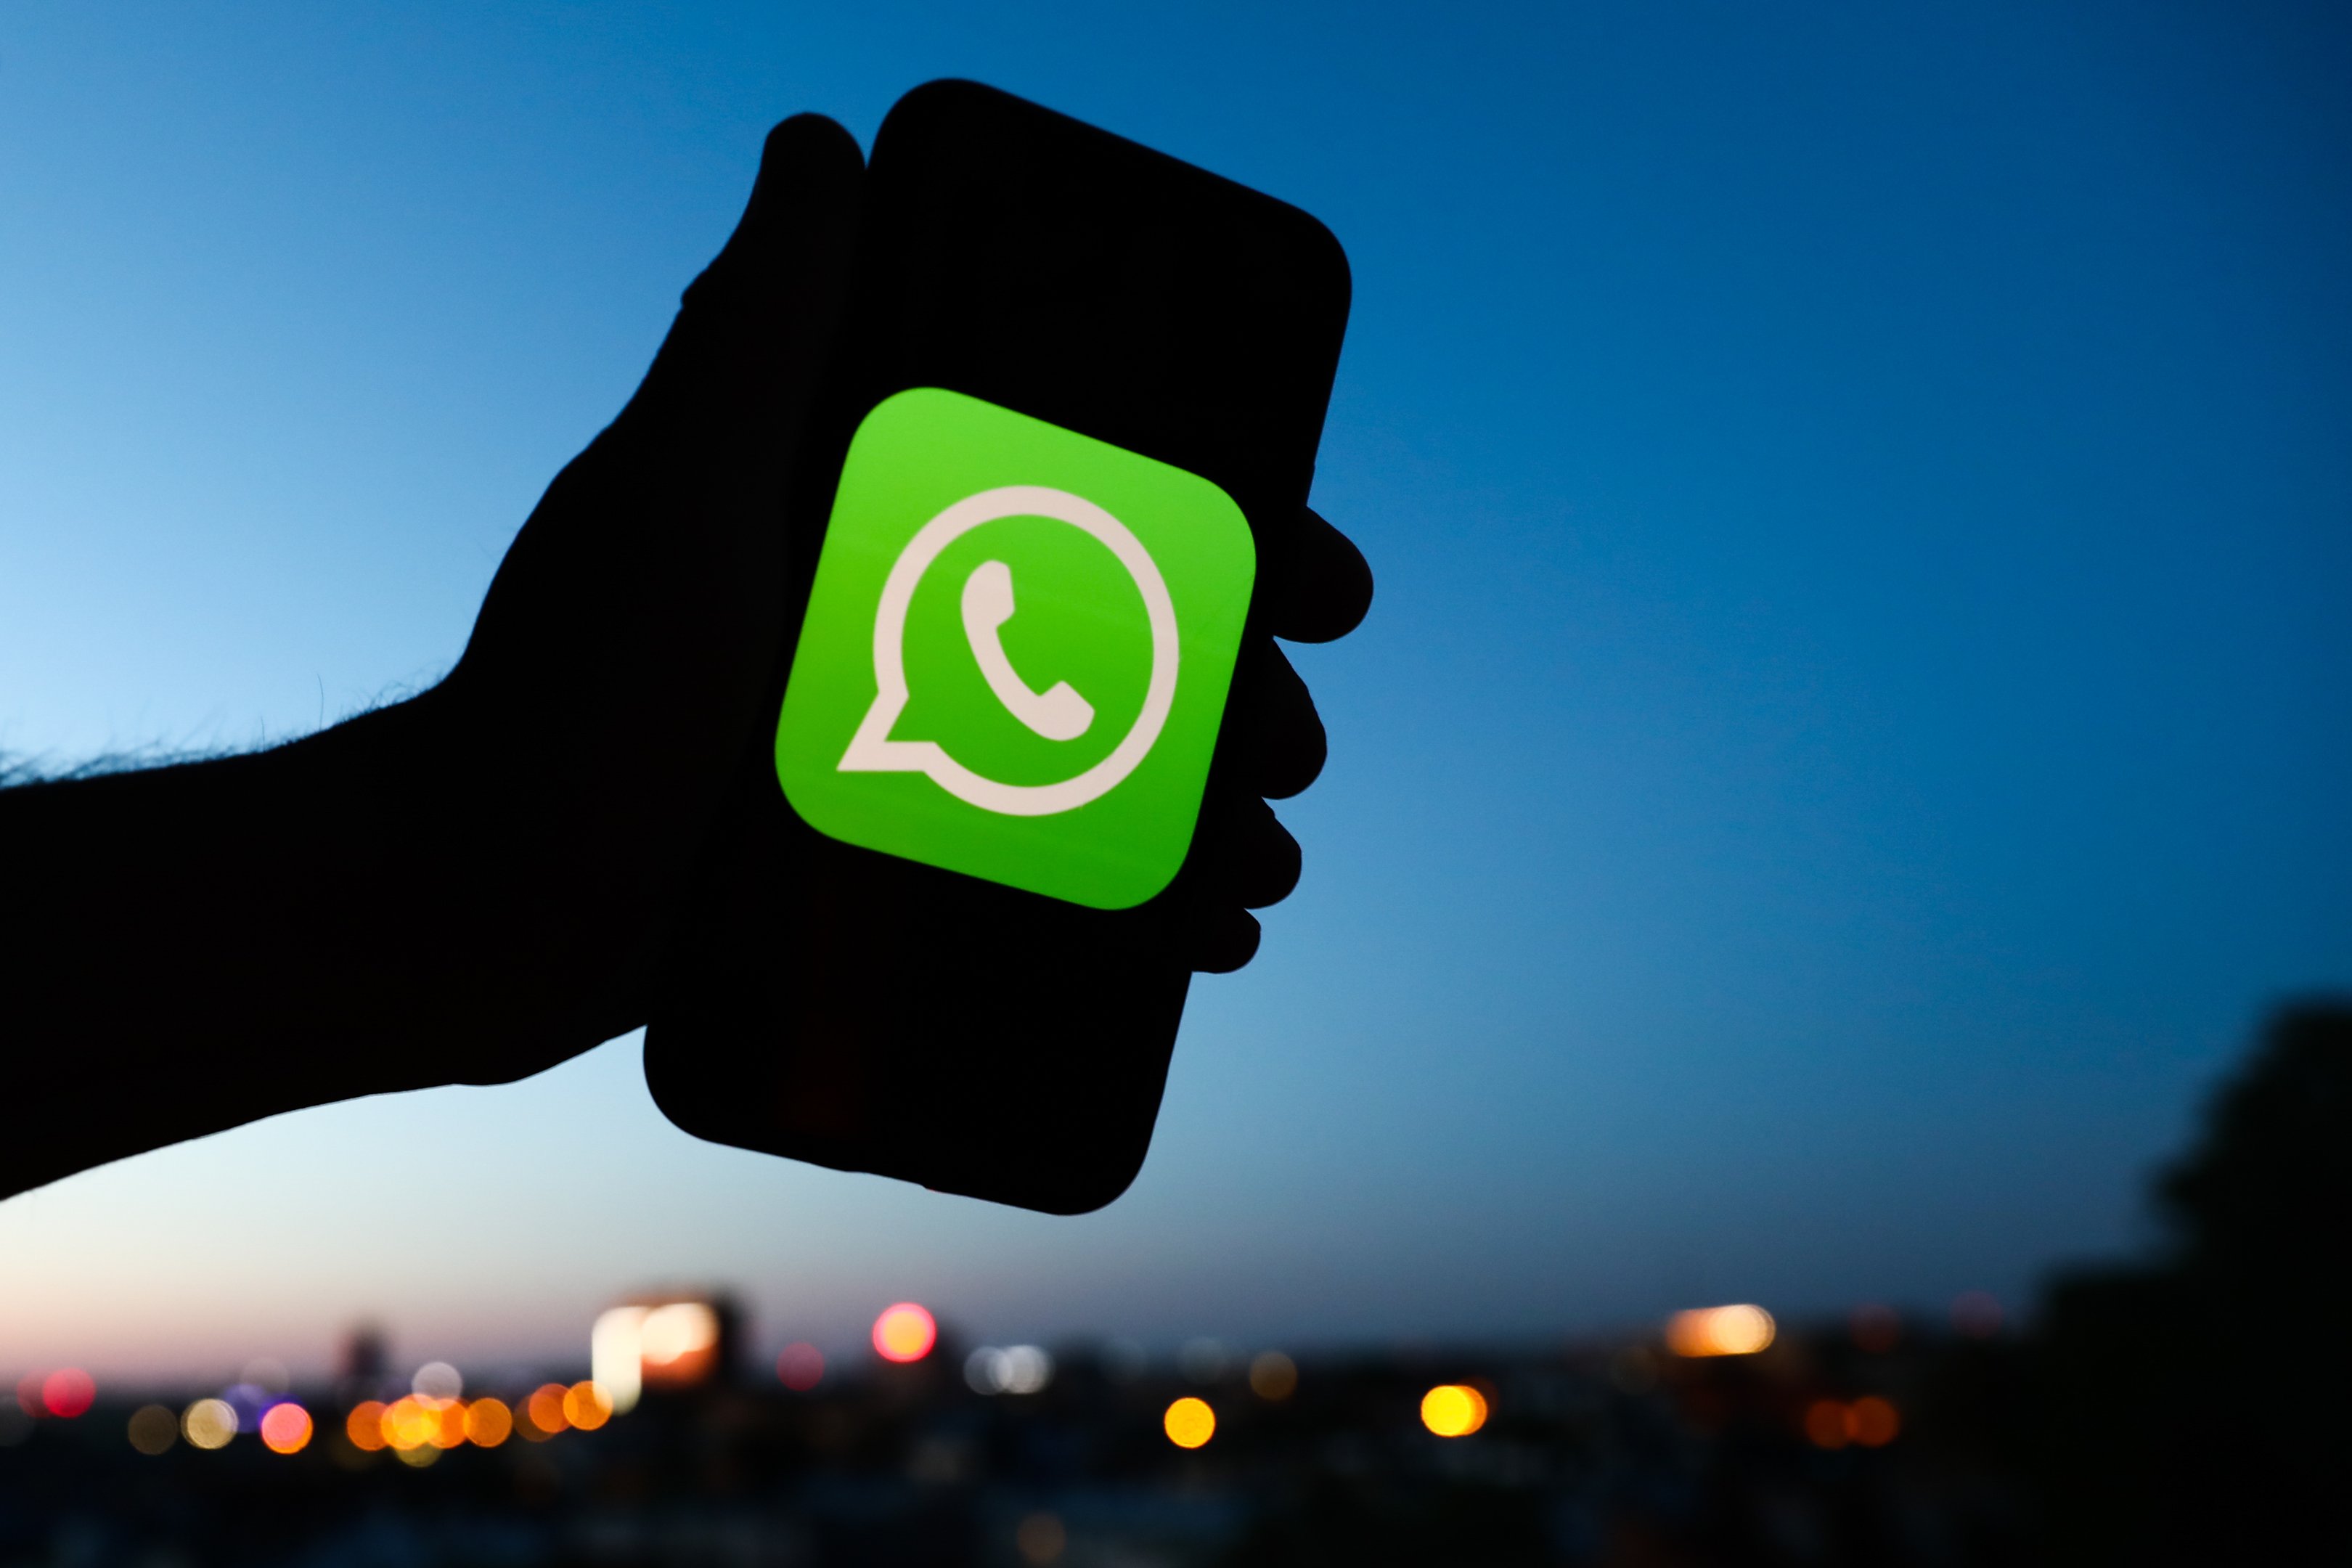  WhatsApp: 3 ویژگی مخفی که تجربه شما را متحول می کند!